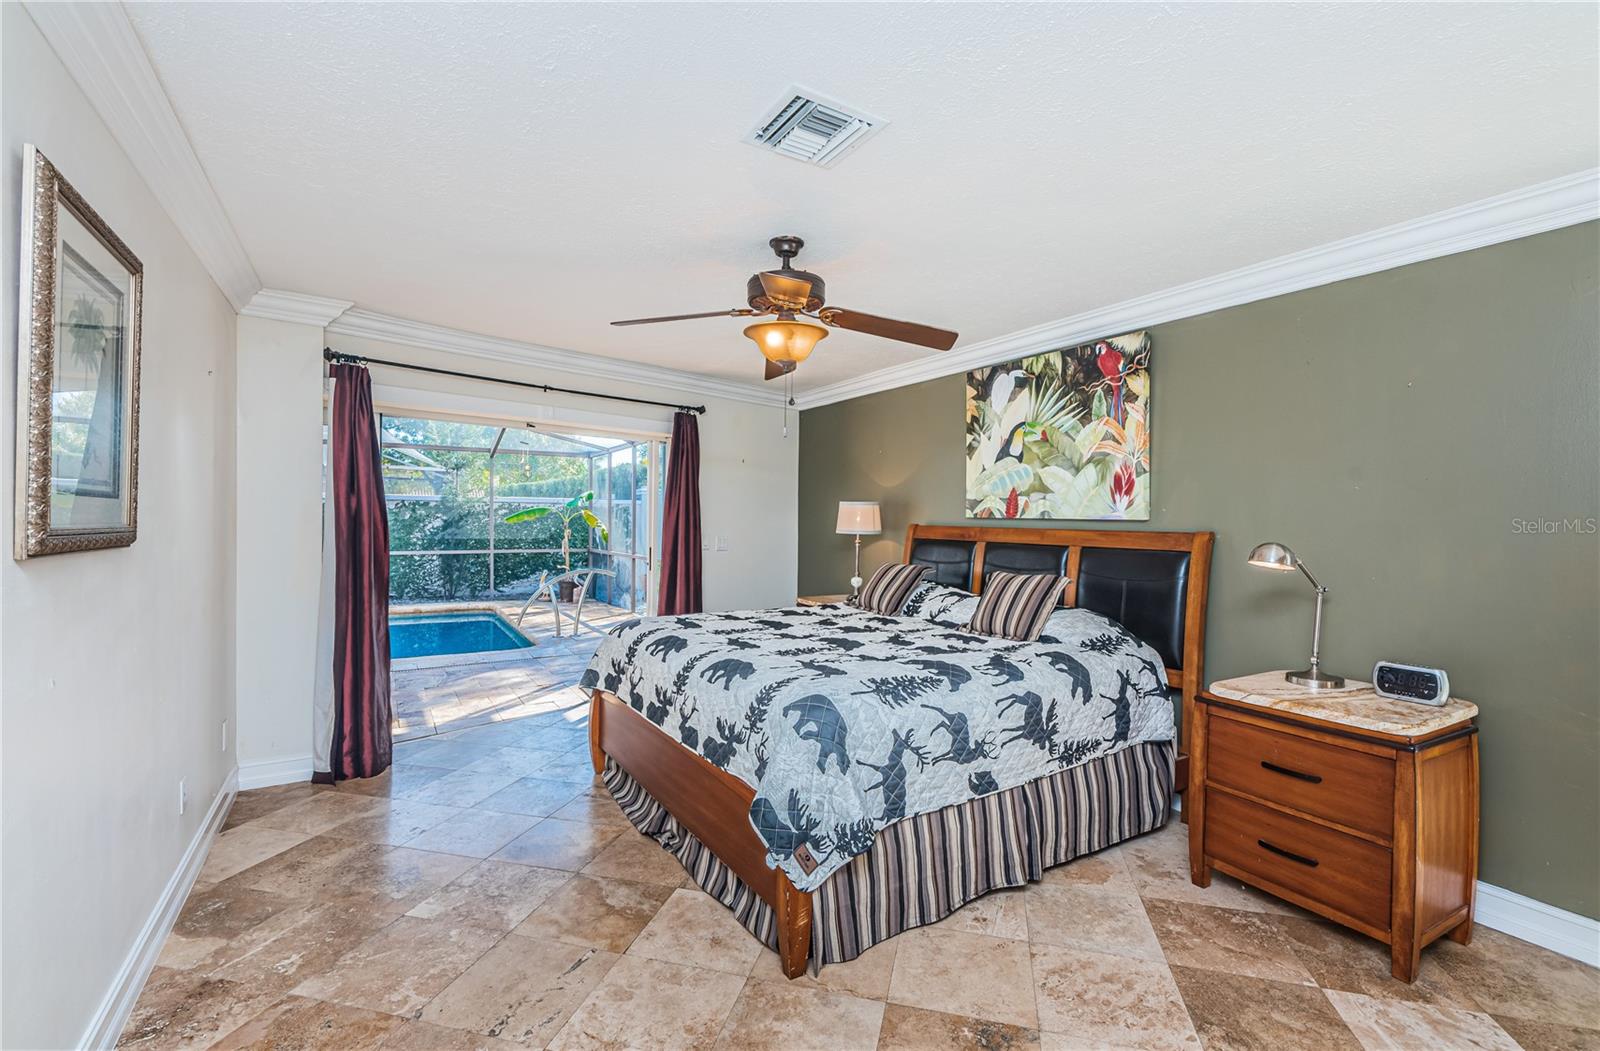 Master bedroom overlooks pool and features travertine flooring.